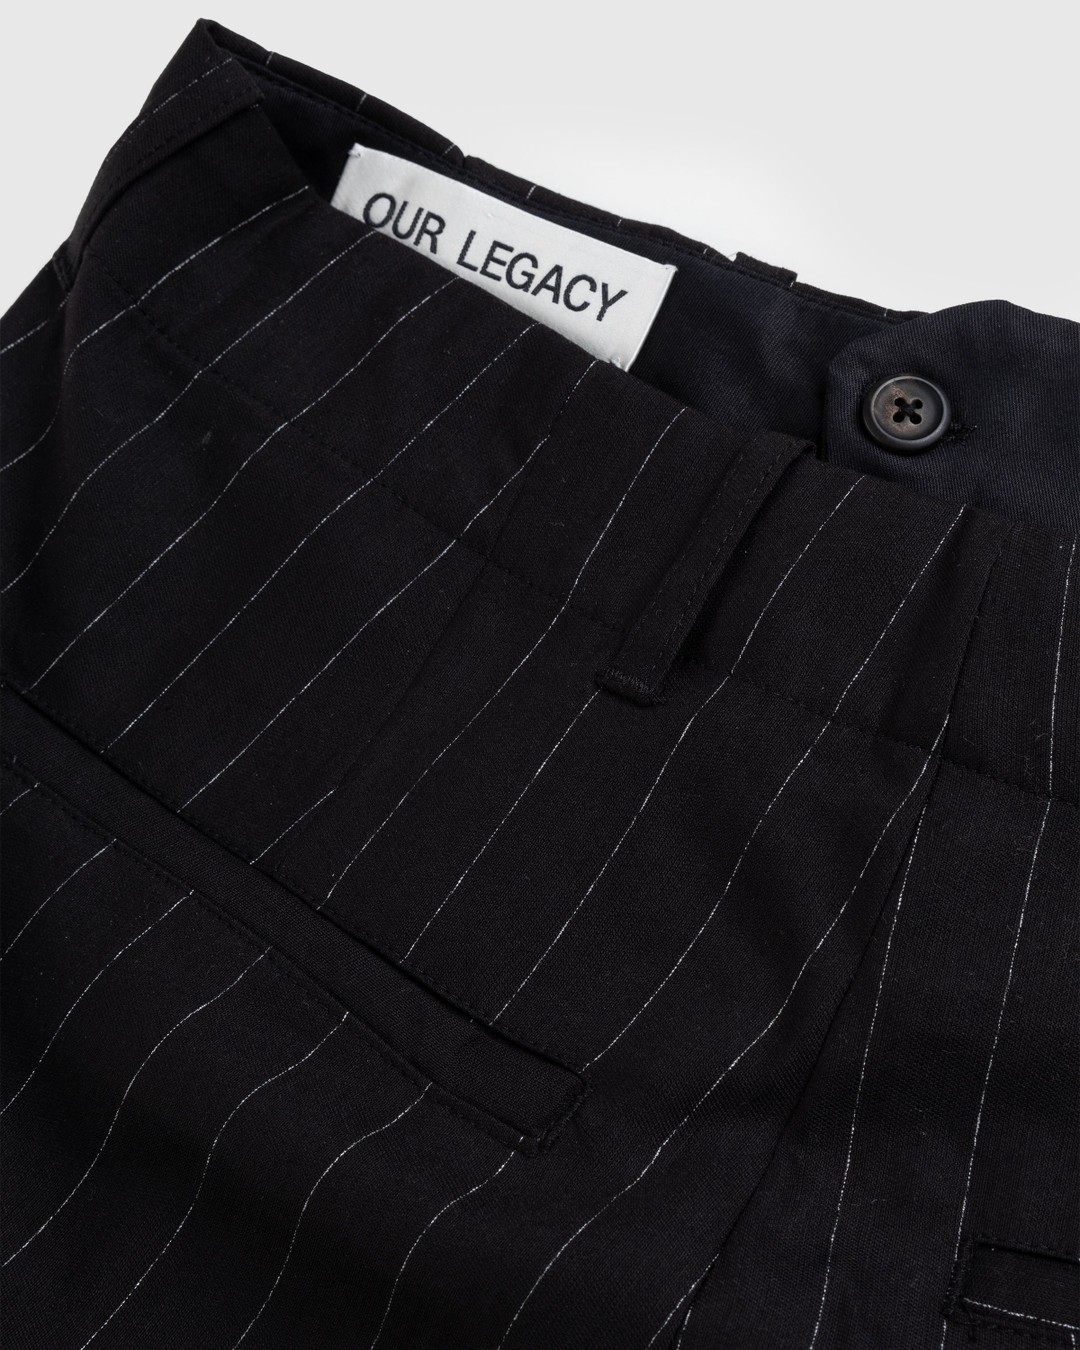 Our Legacy – Borrowed Chino Black Chalk Stripe - Pants - Black - Image 6